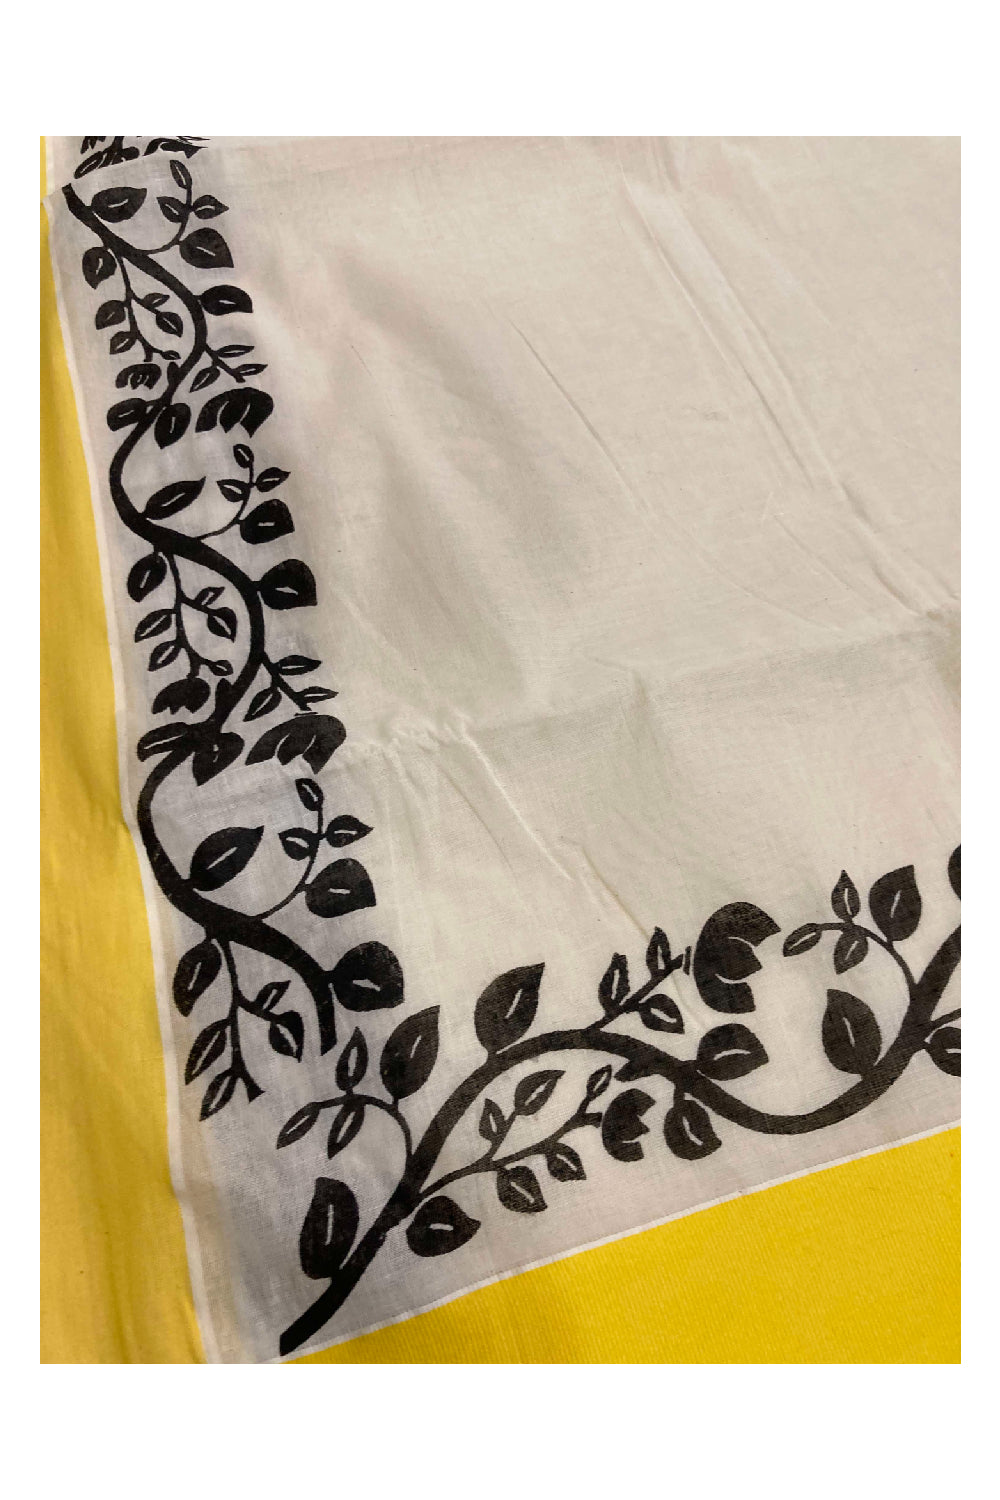 Southloom Original Design Kerala Saree with Black Floral Vines Block Print on Yellow Border